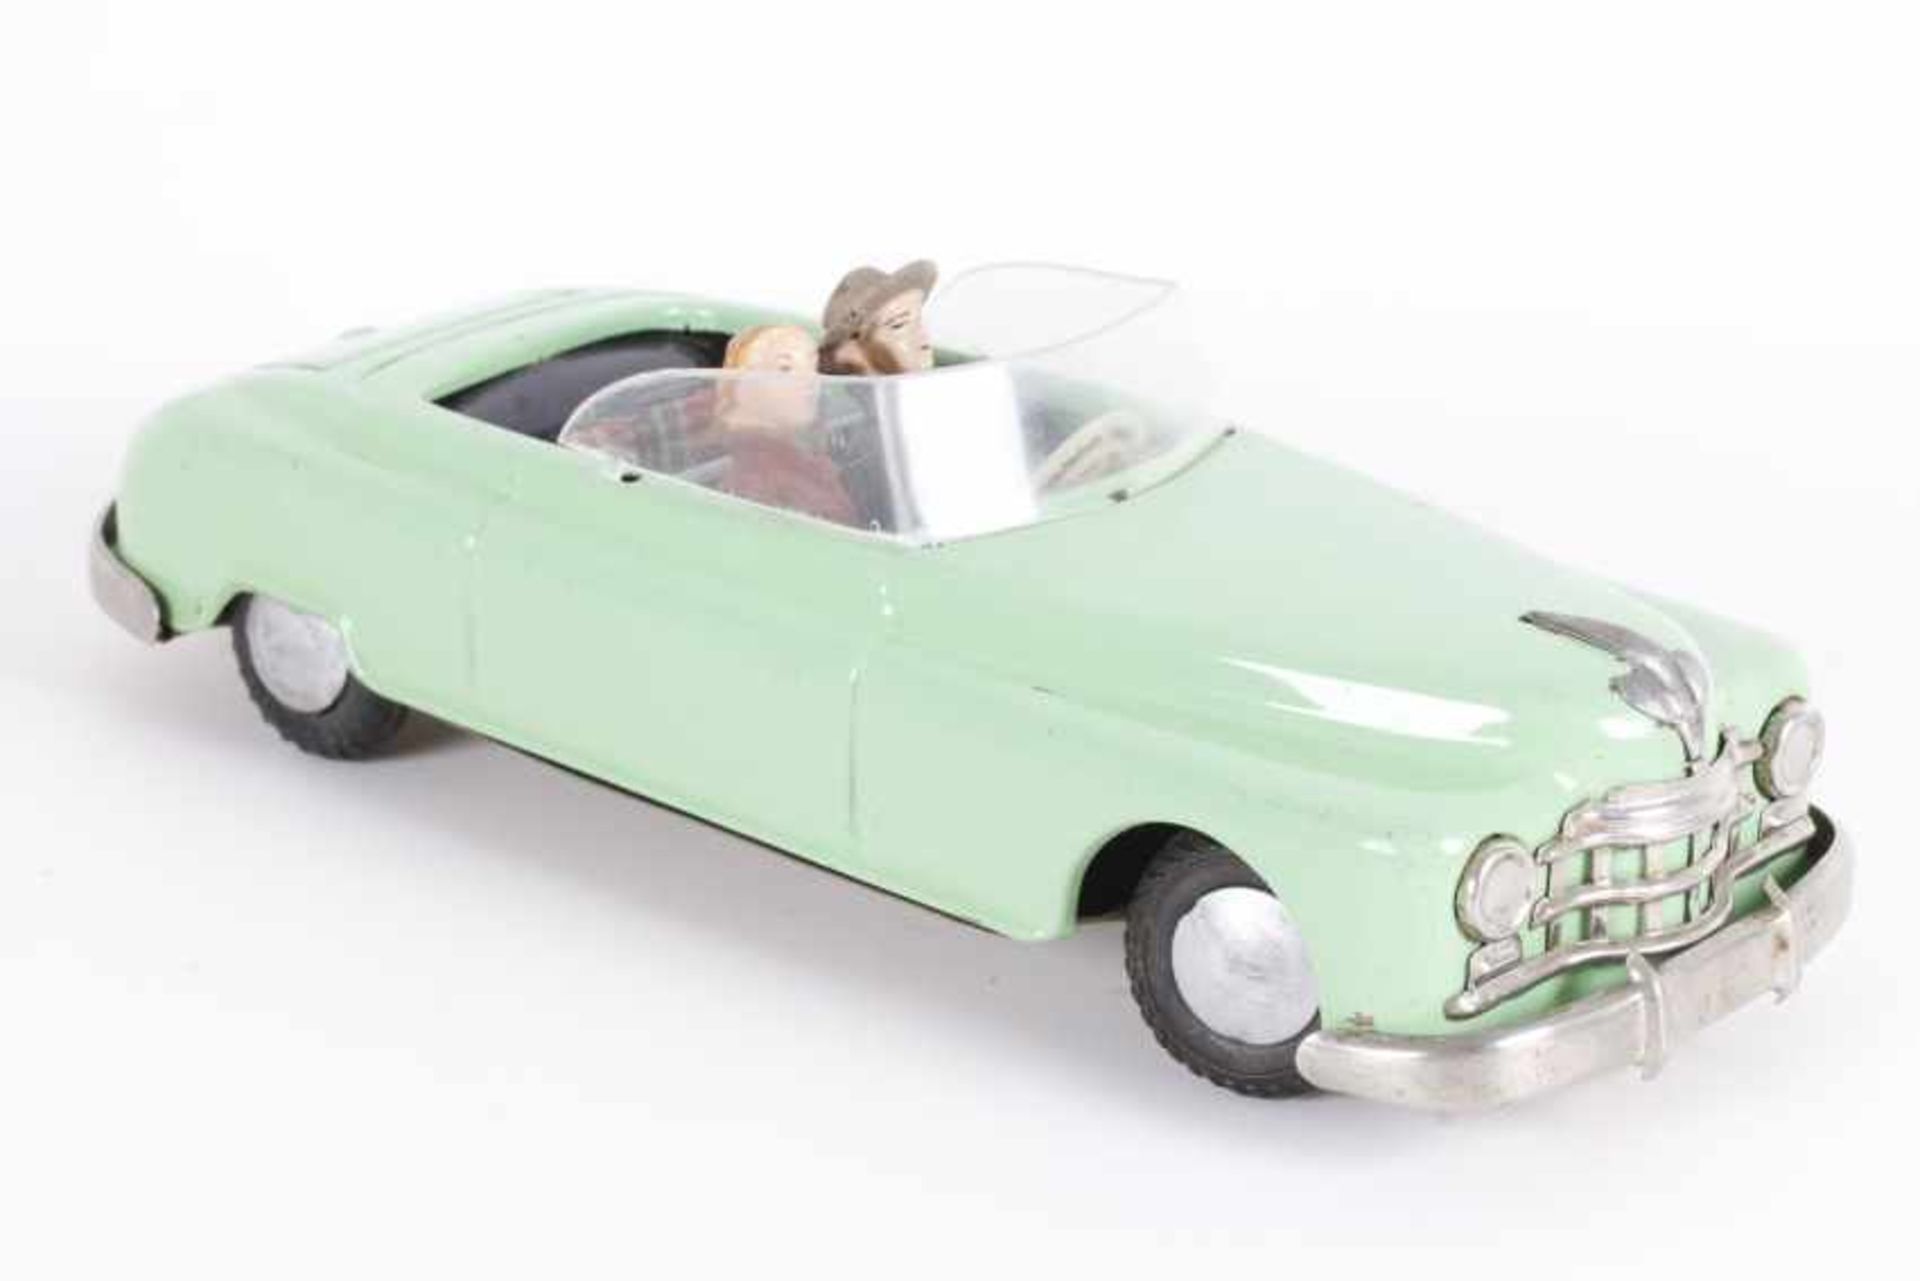 Arnold Format, viersitziges CabrioArnold Format, viersitziges Cabrio, Blech, 25 cm lang, zwei